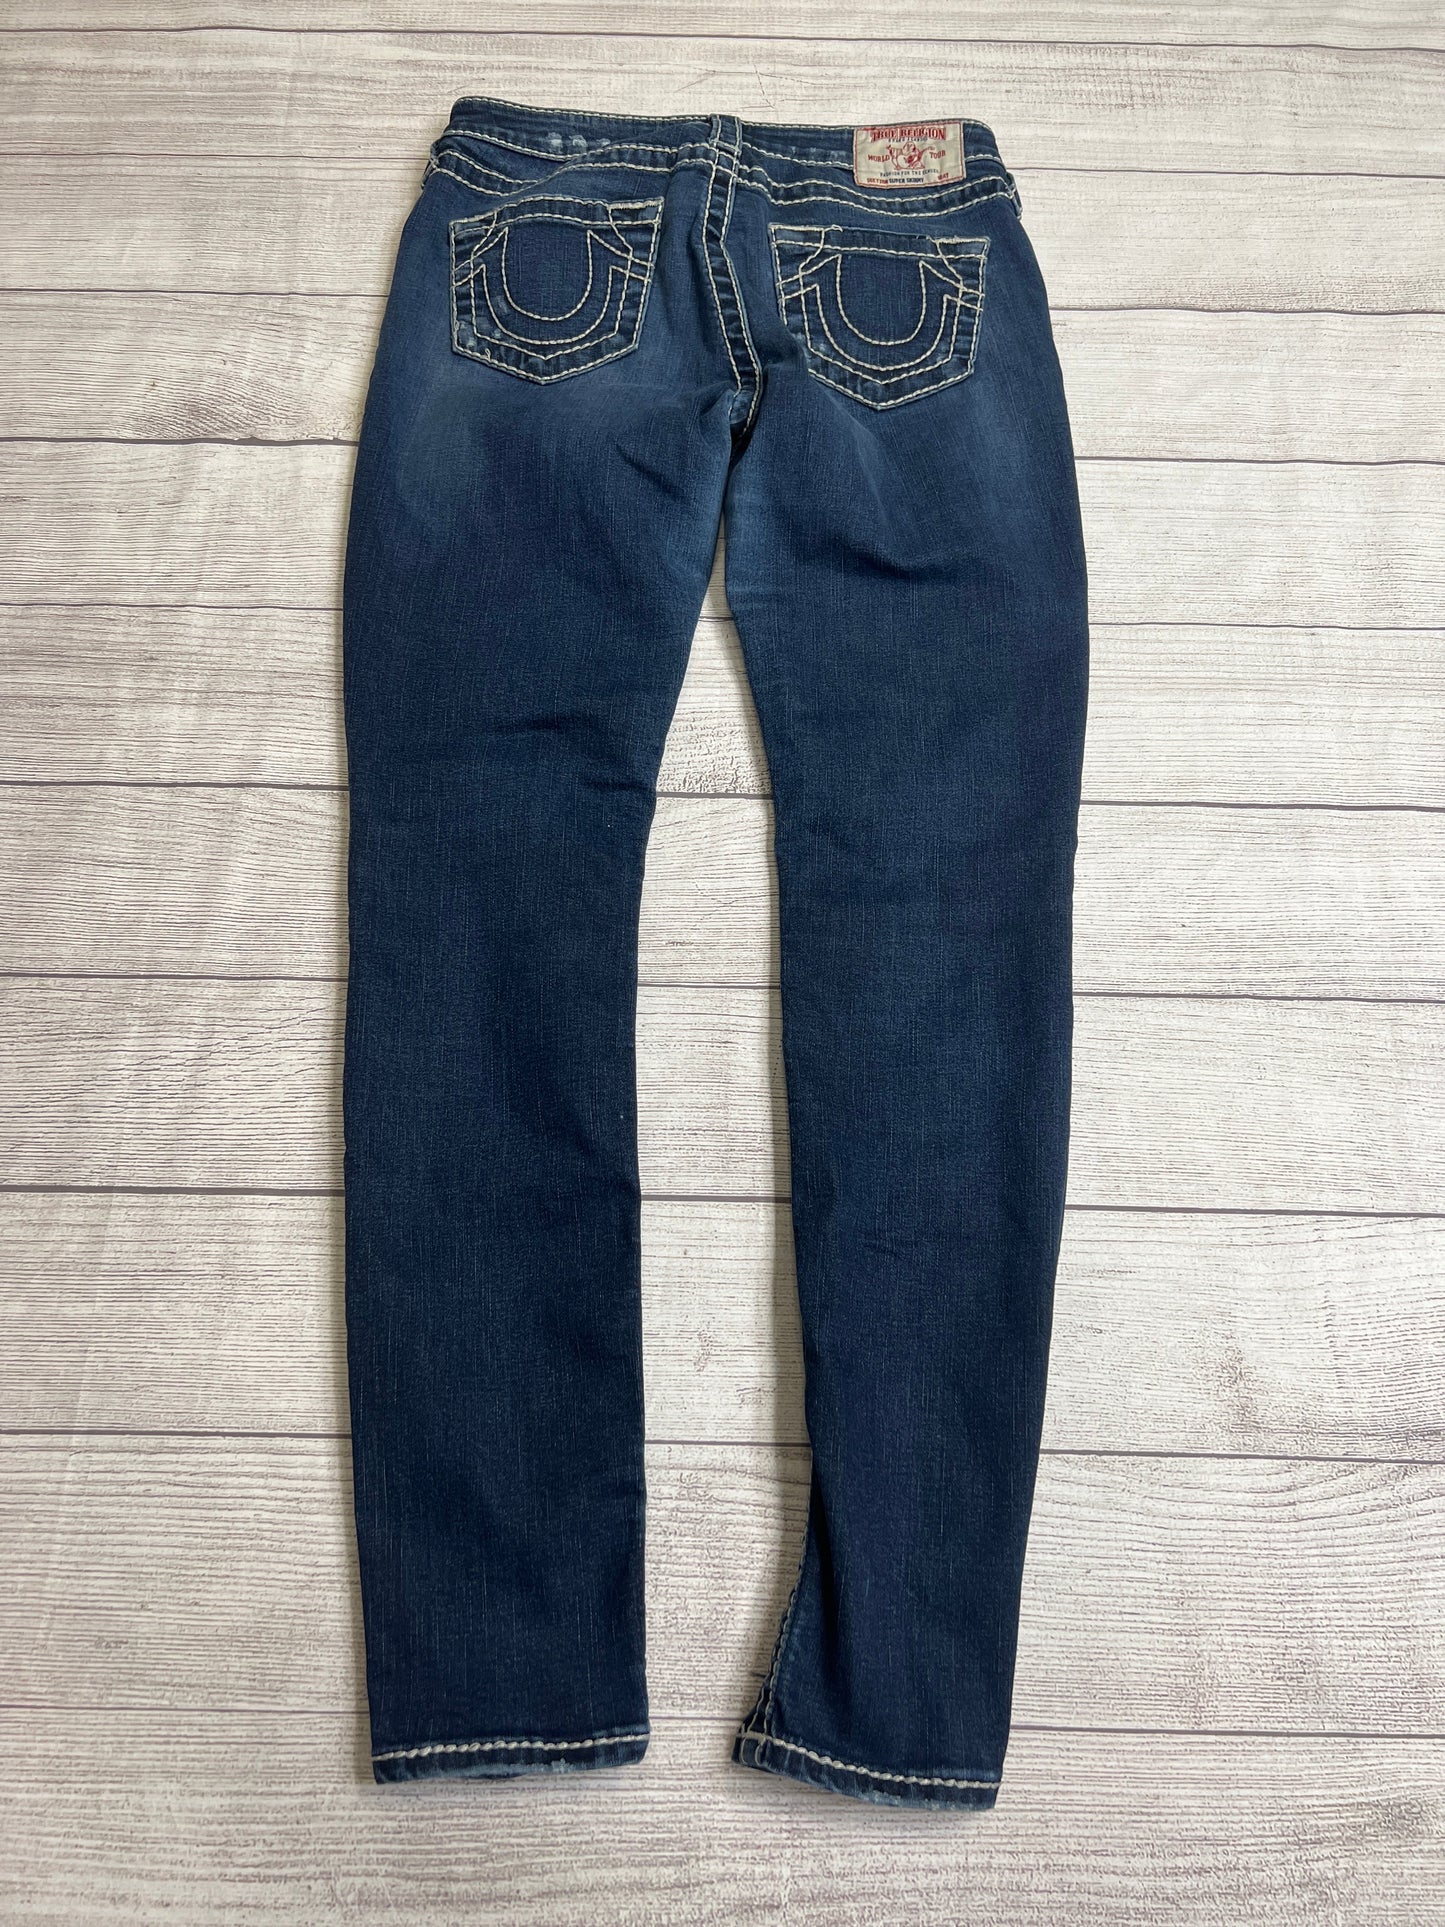 Jeans Designer By True Religion  Size: 4/27